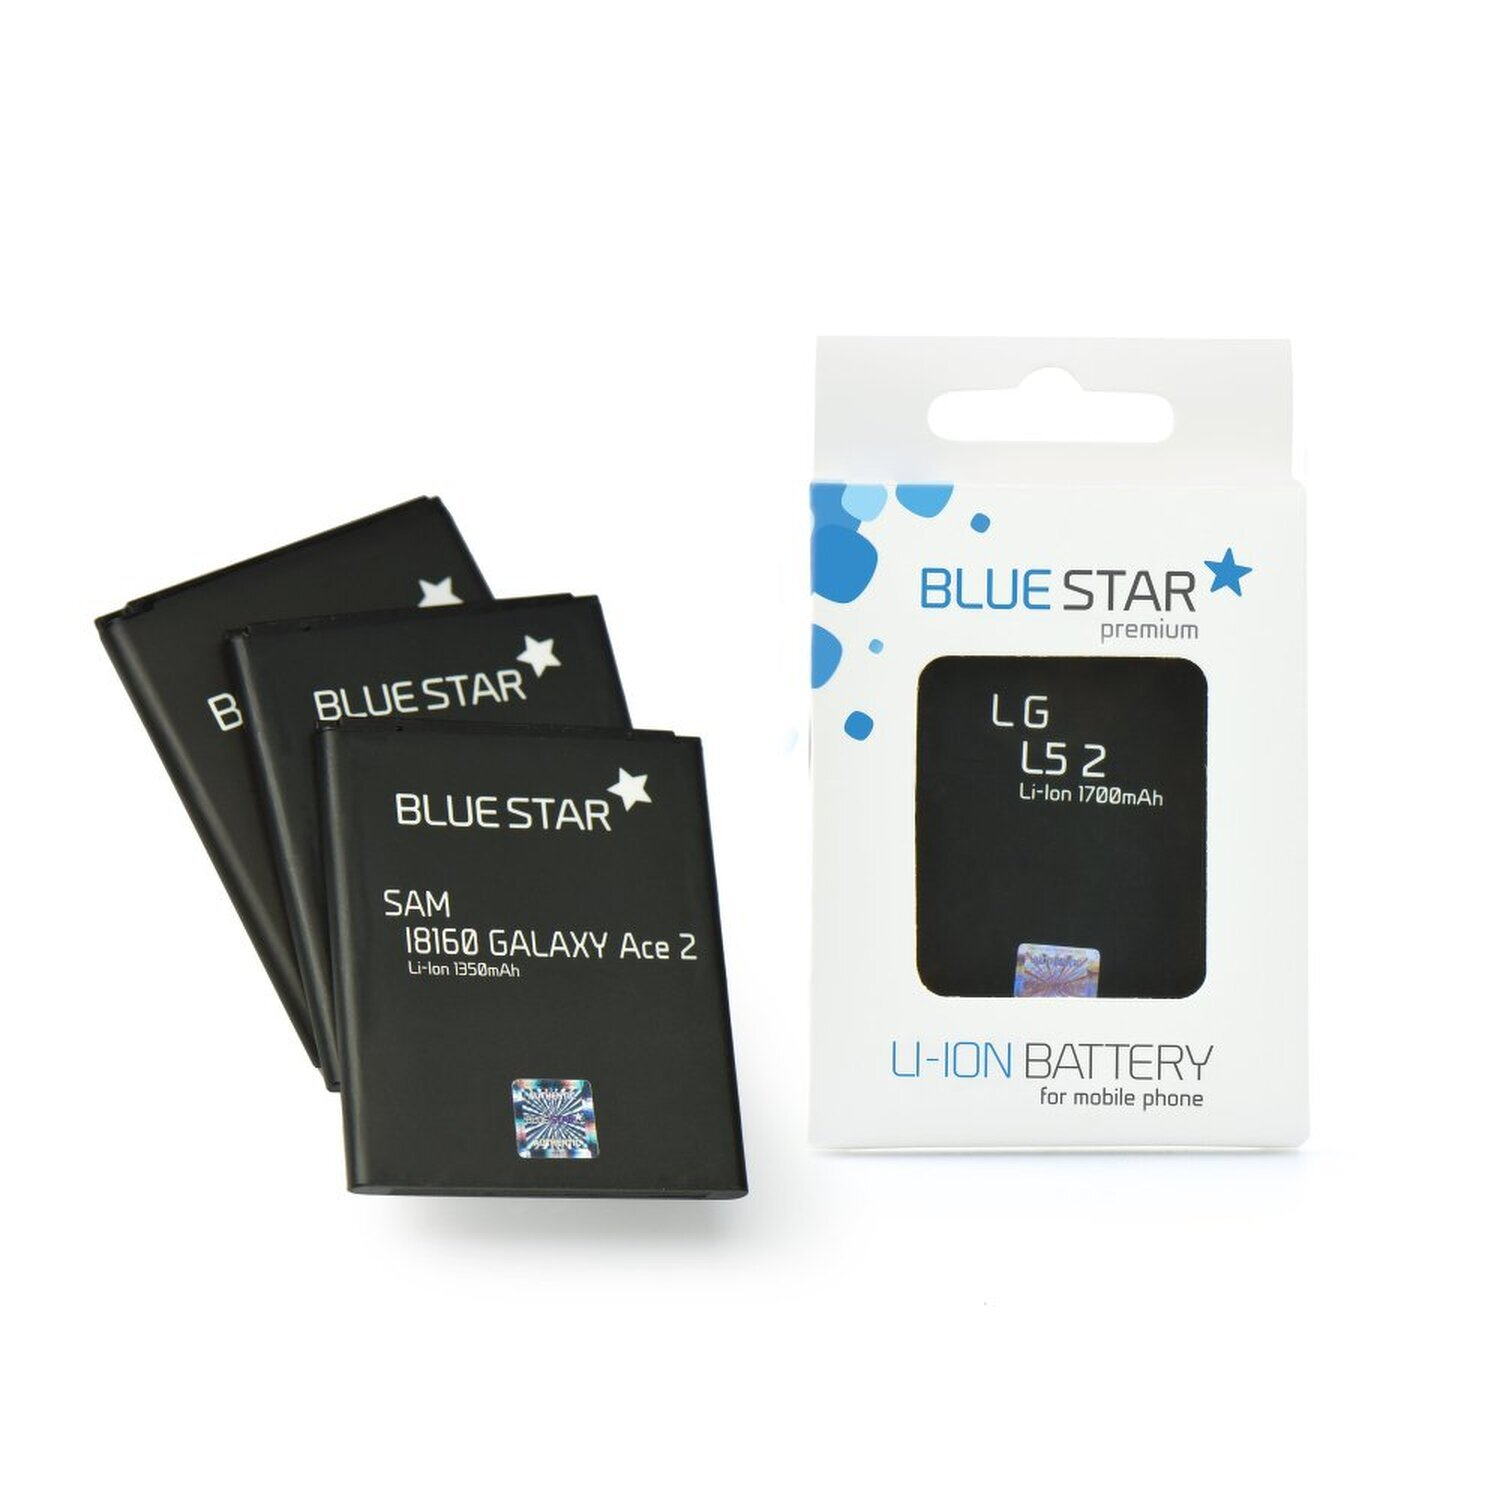 BLUESTAR Li-Ion Lumia 535 Handyakku SIM Dual 535 Nokia / für Akku